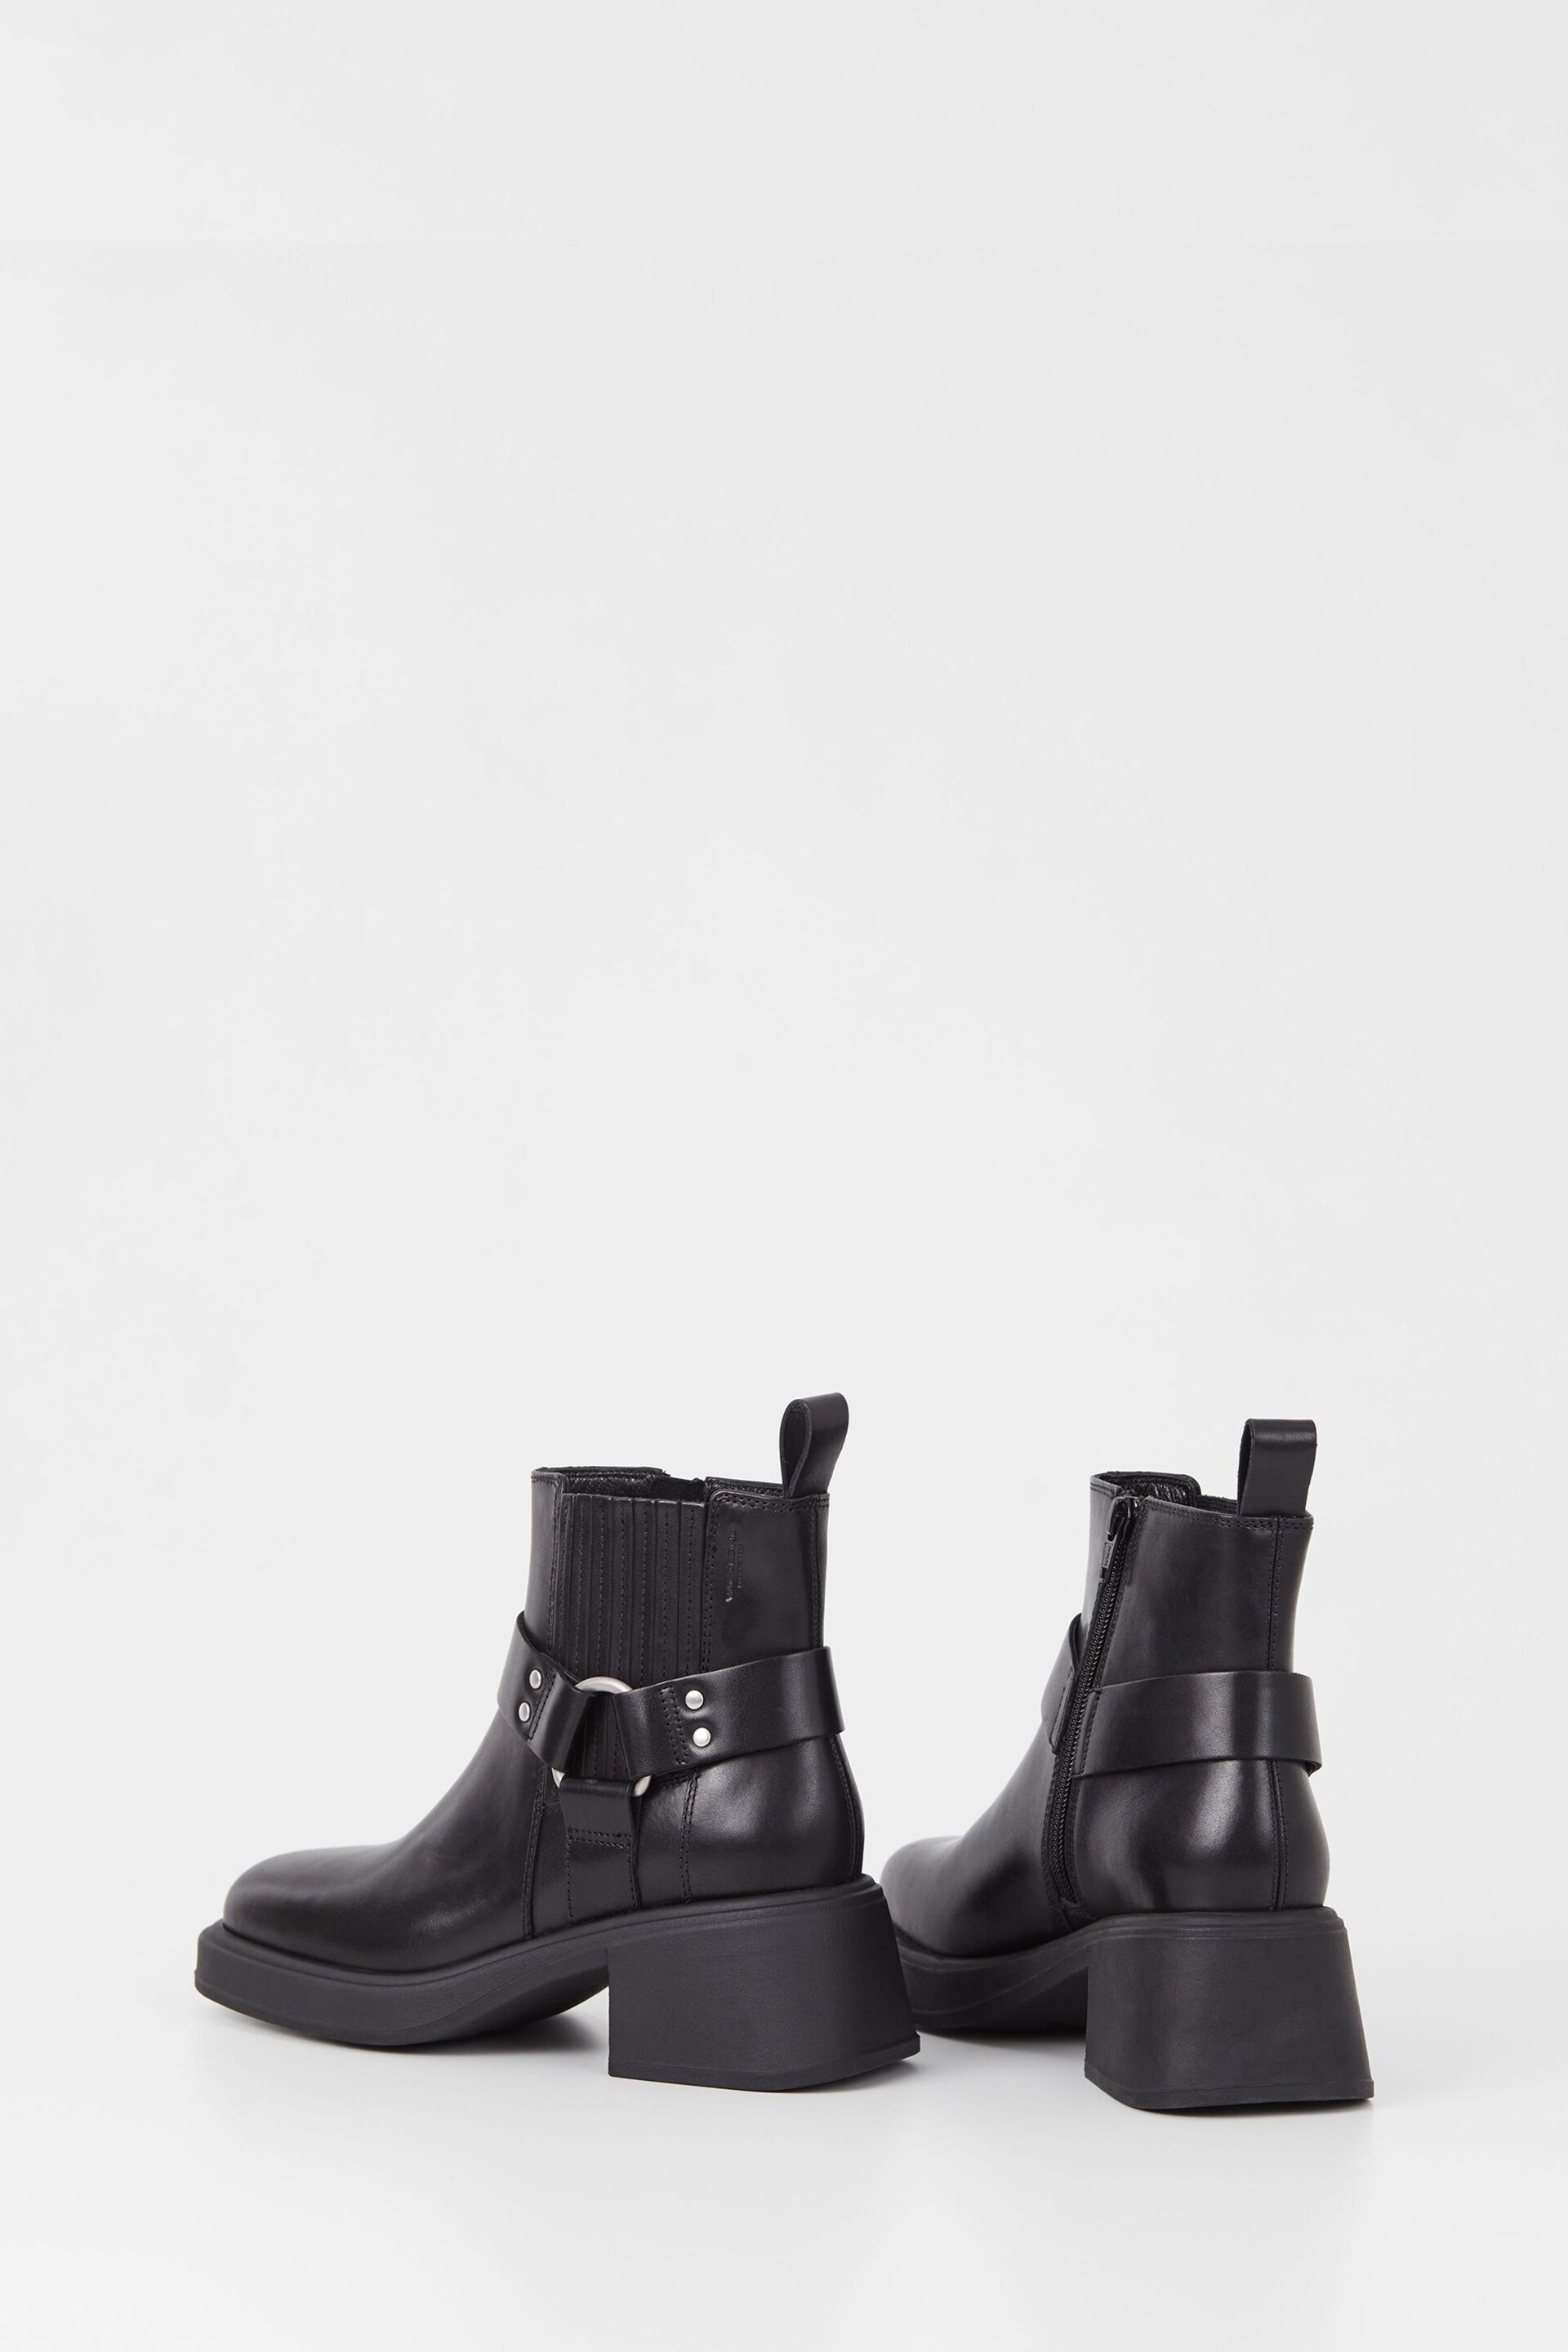 Vagabond Shoemakers Dorah Harness Black Boots - Image 3 of 3